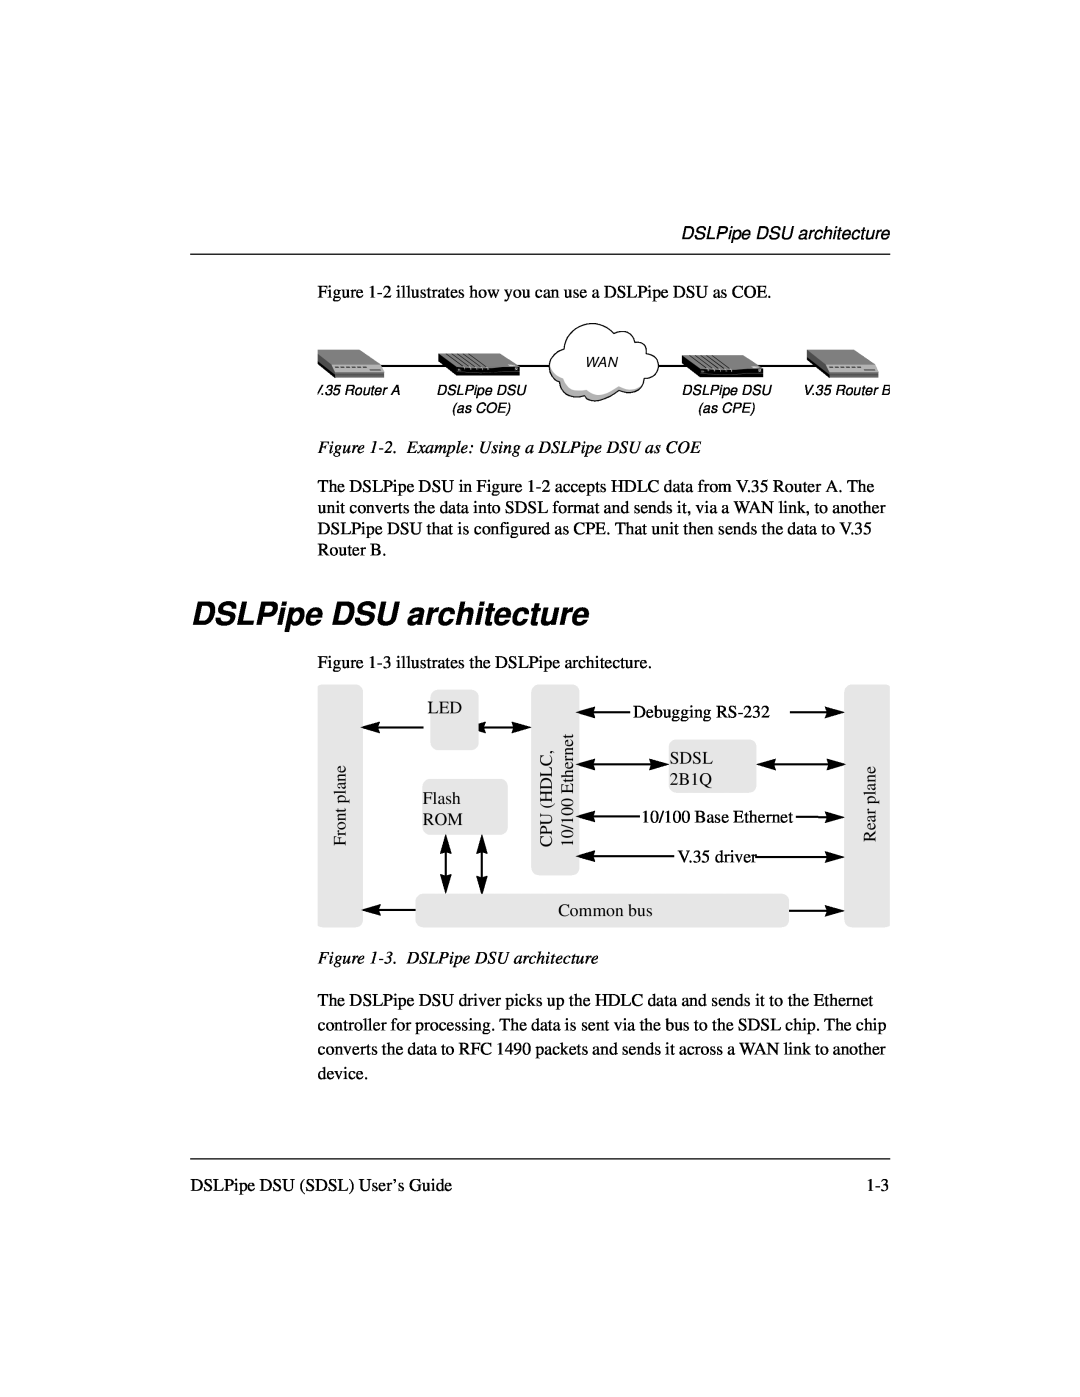 Lucent Technologies 7820-0657-001 manual DSLPipe DSU architecture, 2. Example Using a DSLPipe DSU as COE 